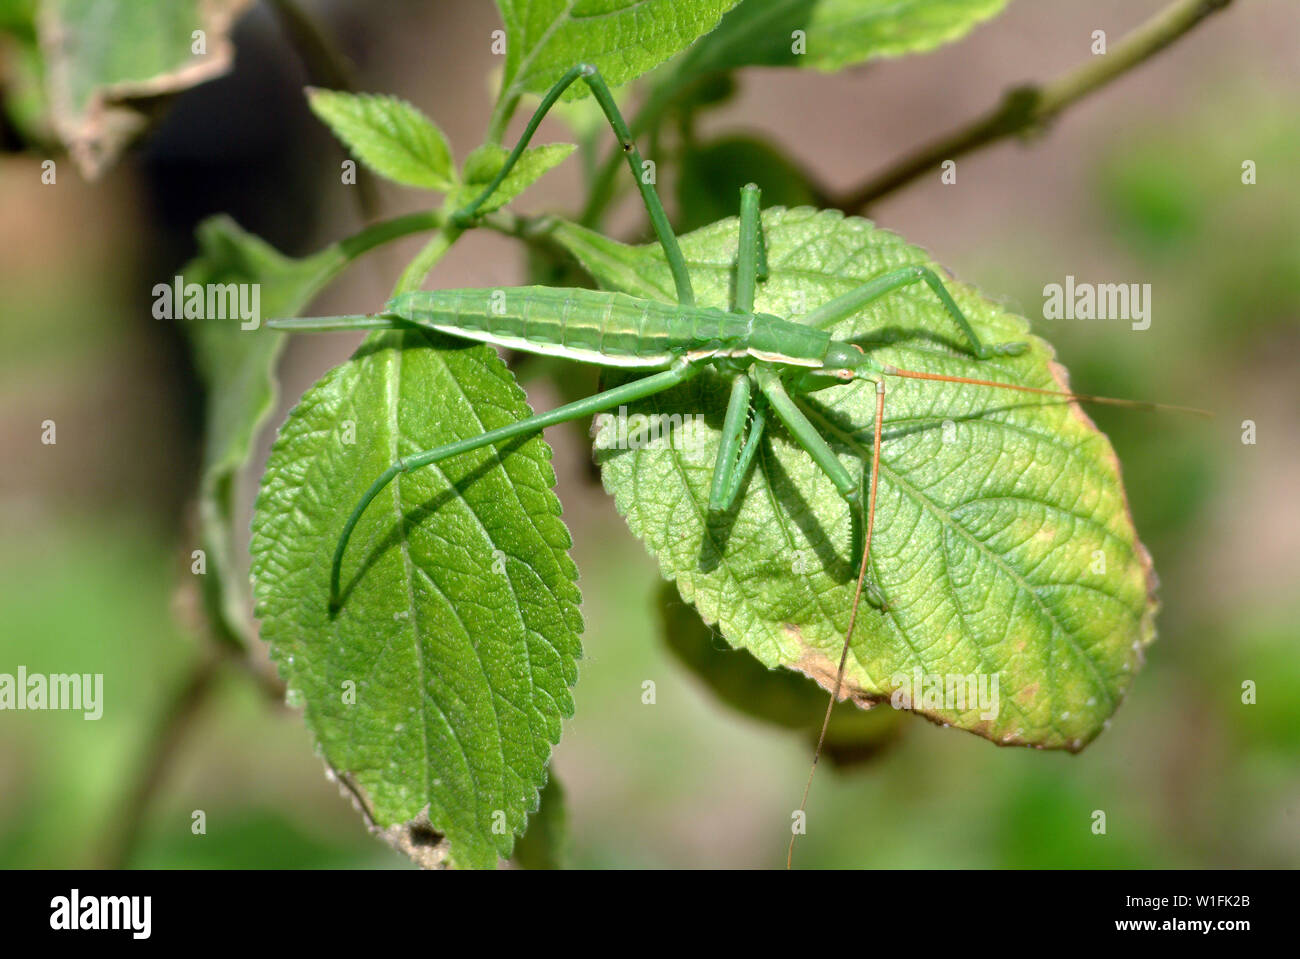 Saga, hellenica grasshopper, Heuschrecke Foto Stock